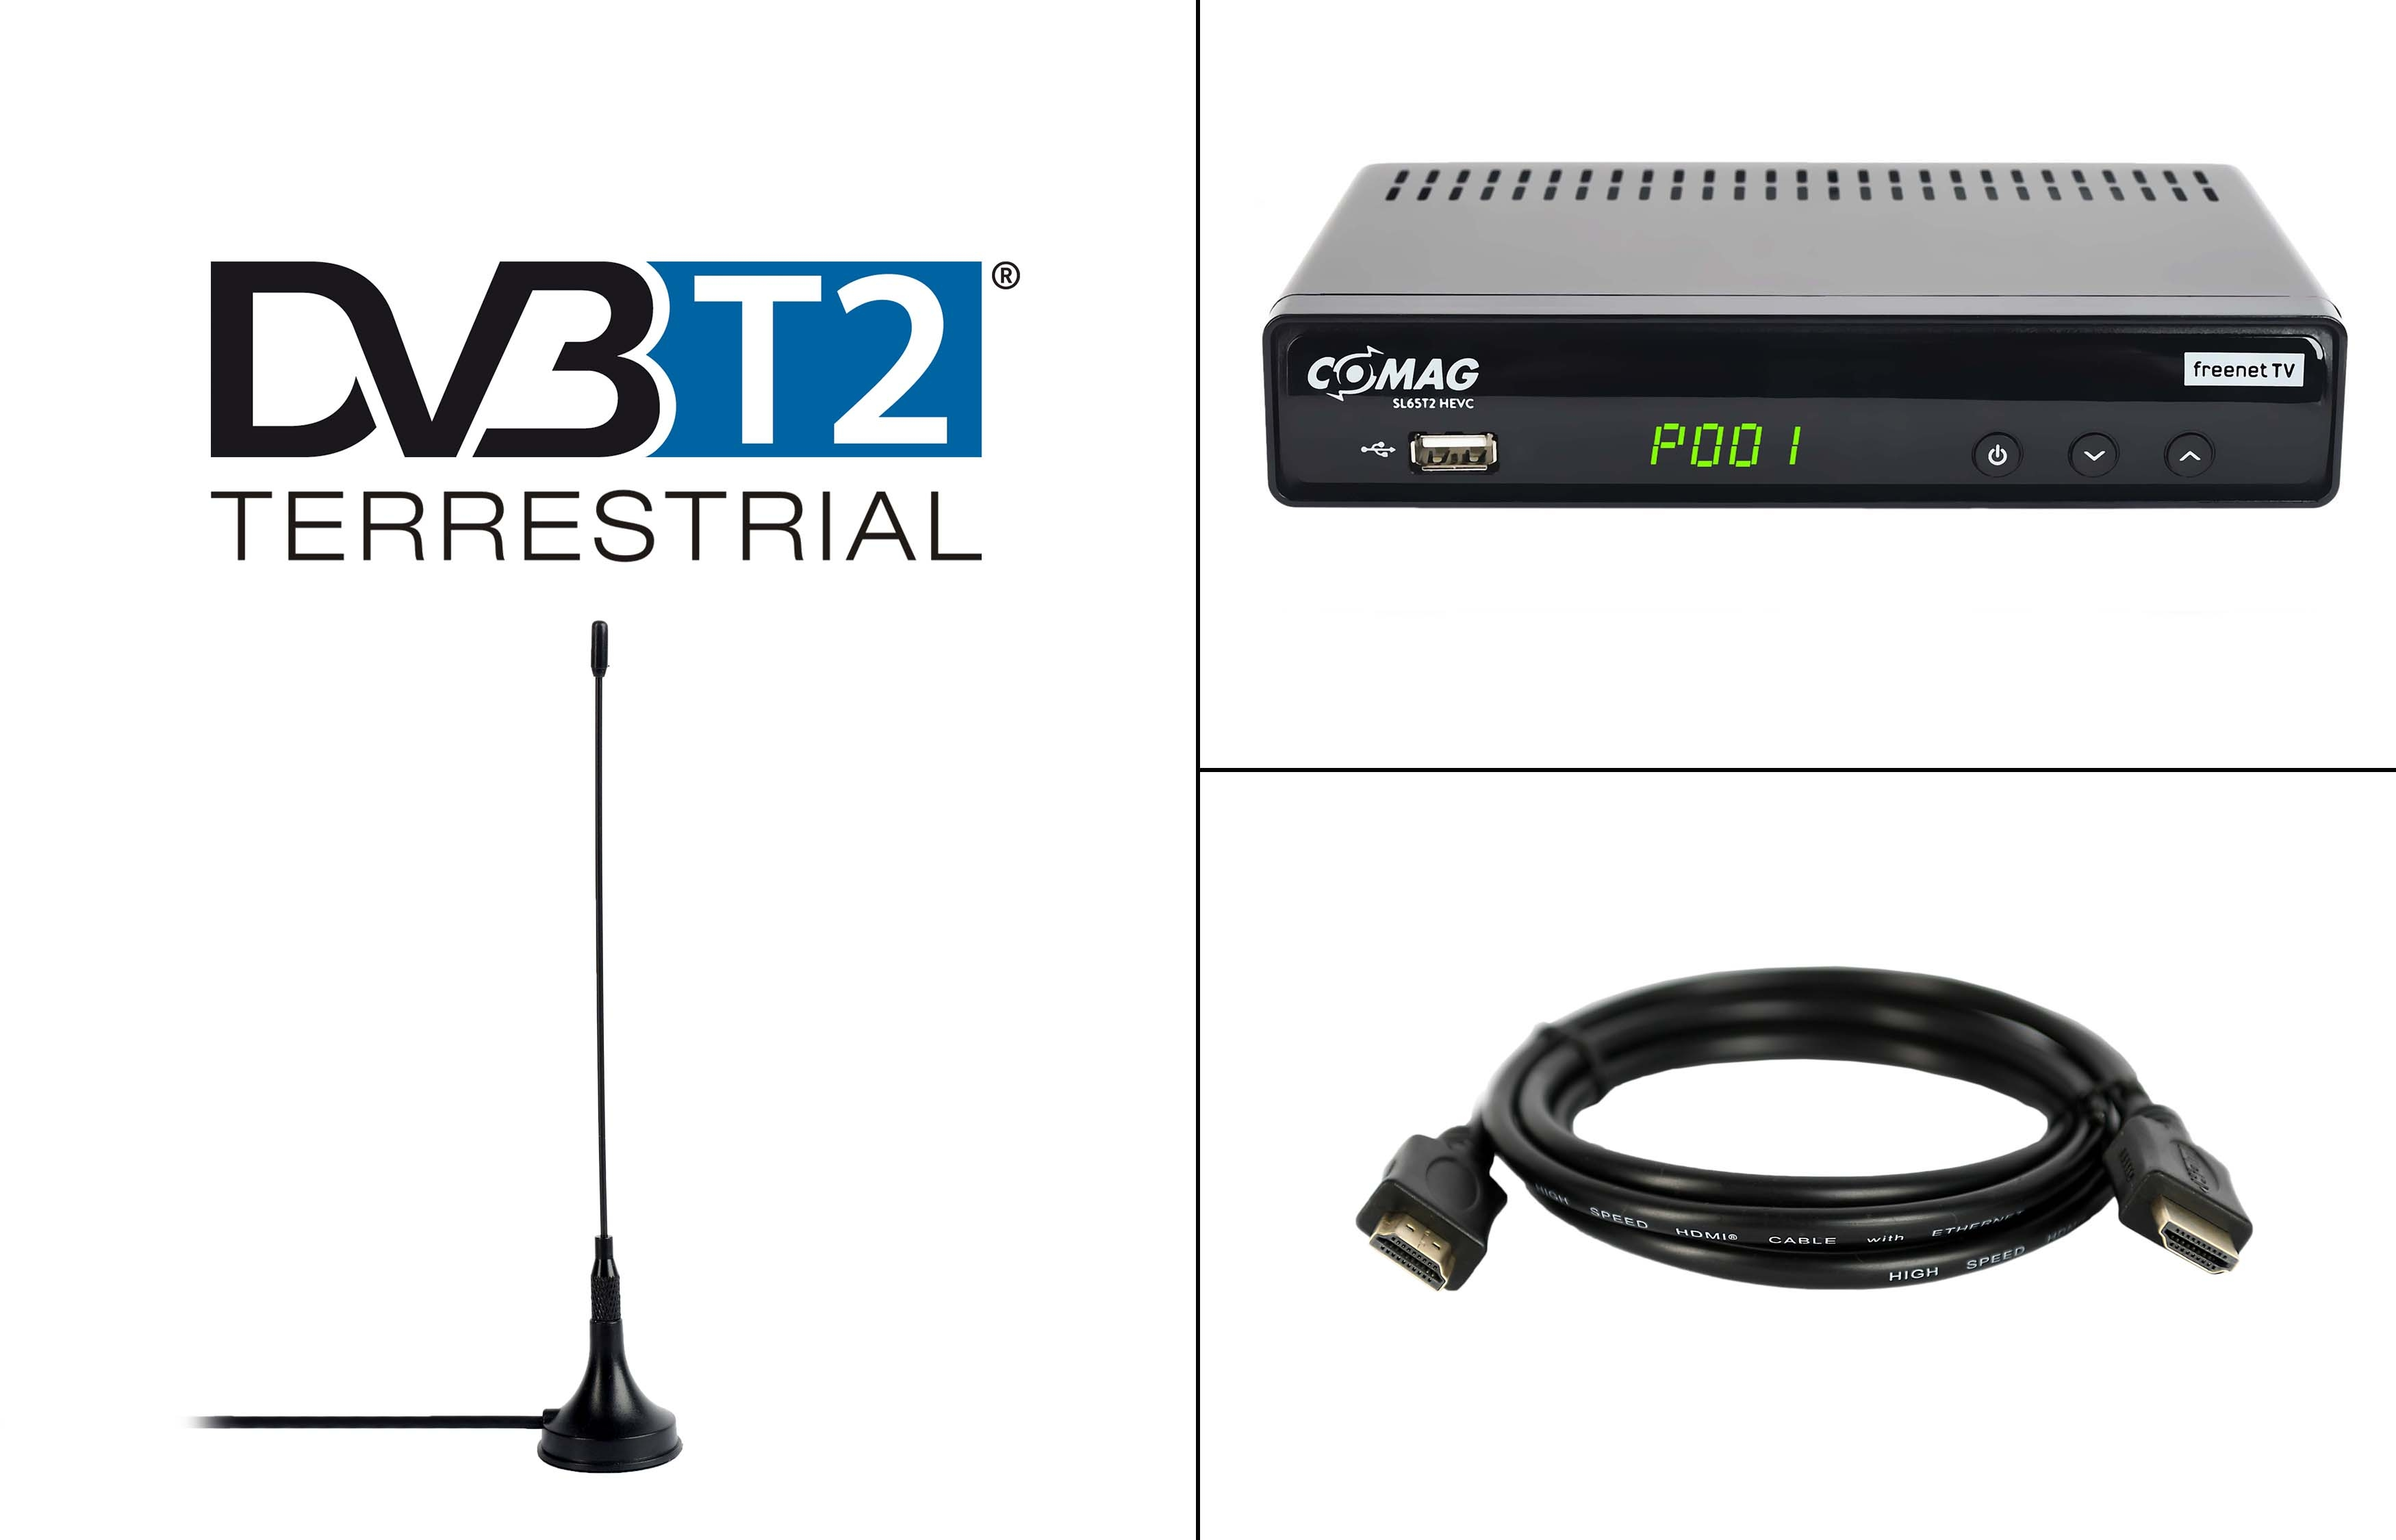 COMAG SL65T2 Home Bundel DVB-T2 (H.264), DVB-T-Receiver DVB-T, PVR-Funktion, (H.265), schwarz) (HDTV, DVB-T2